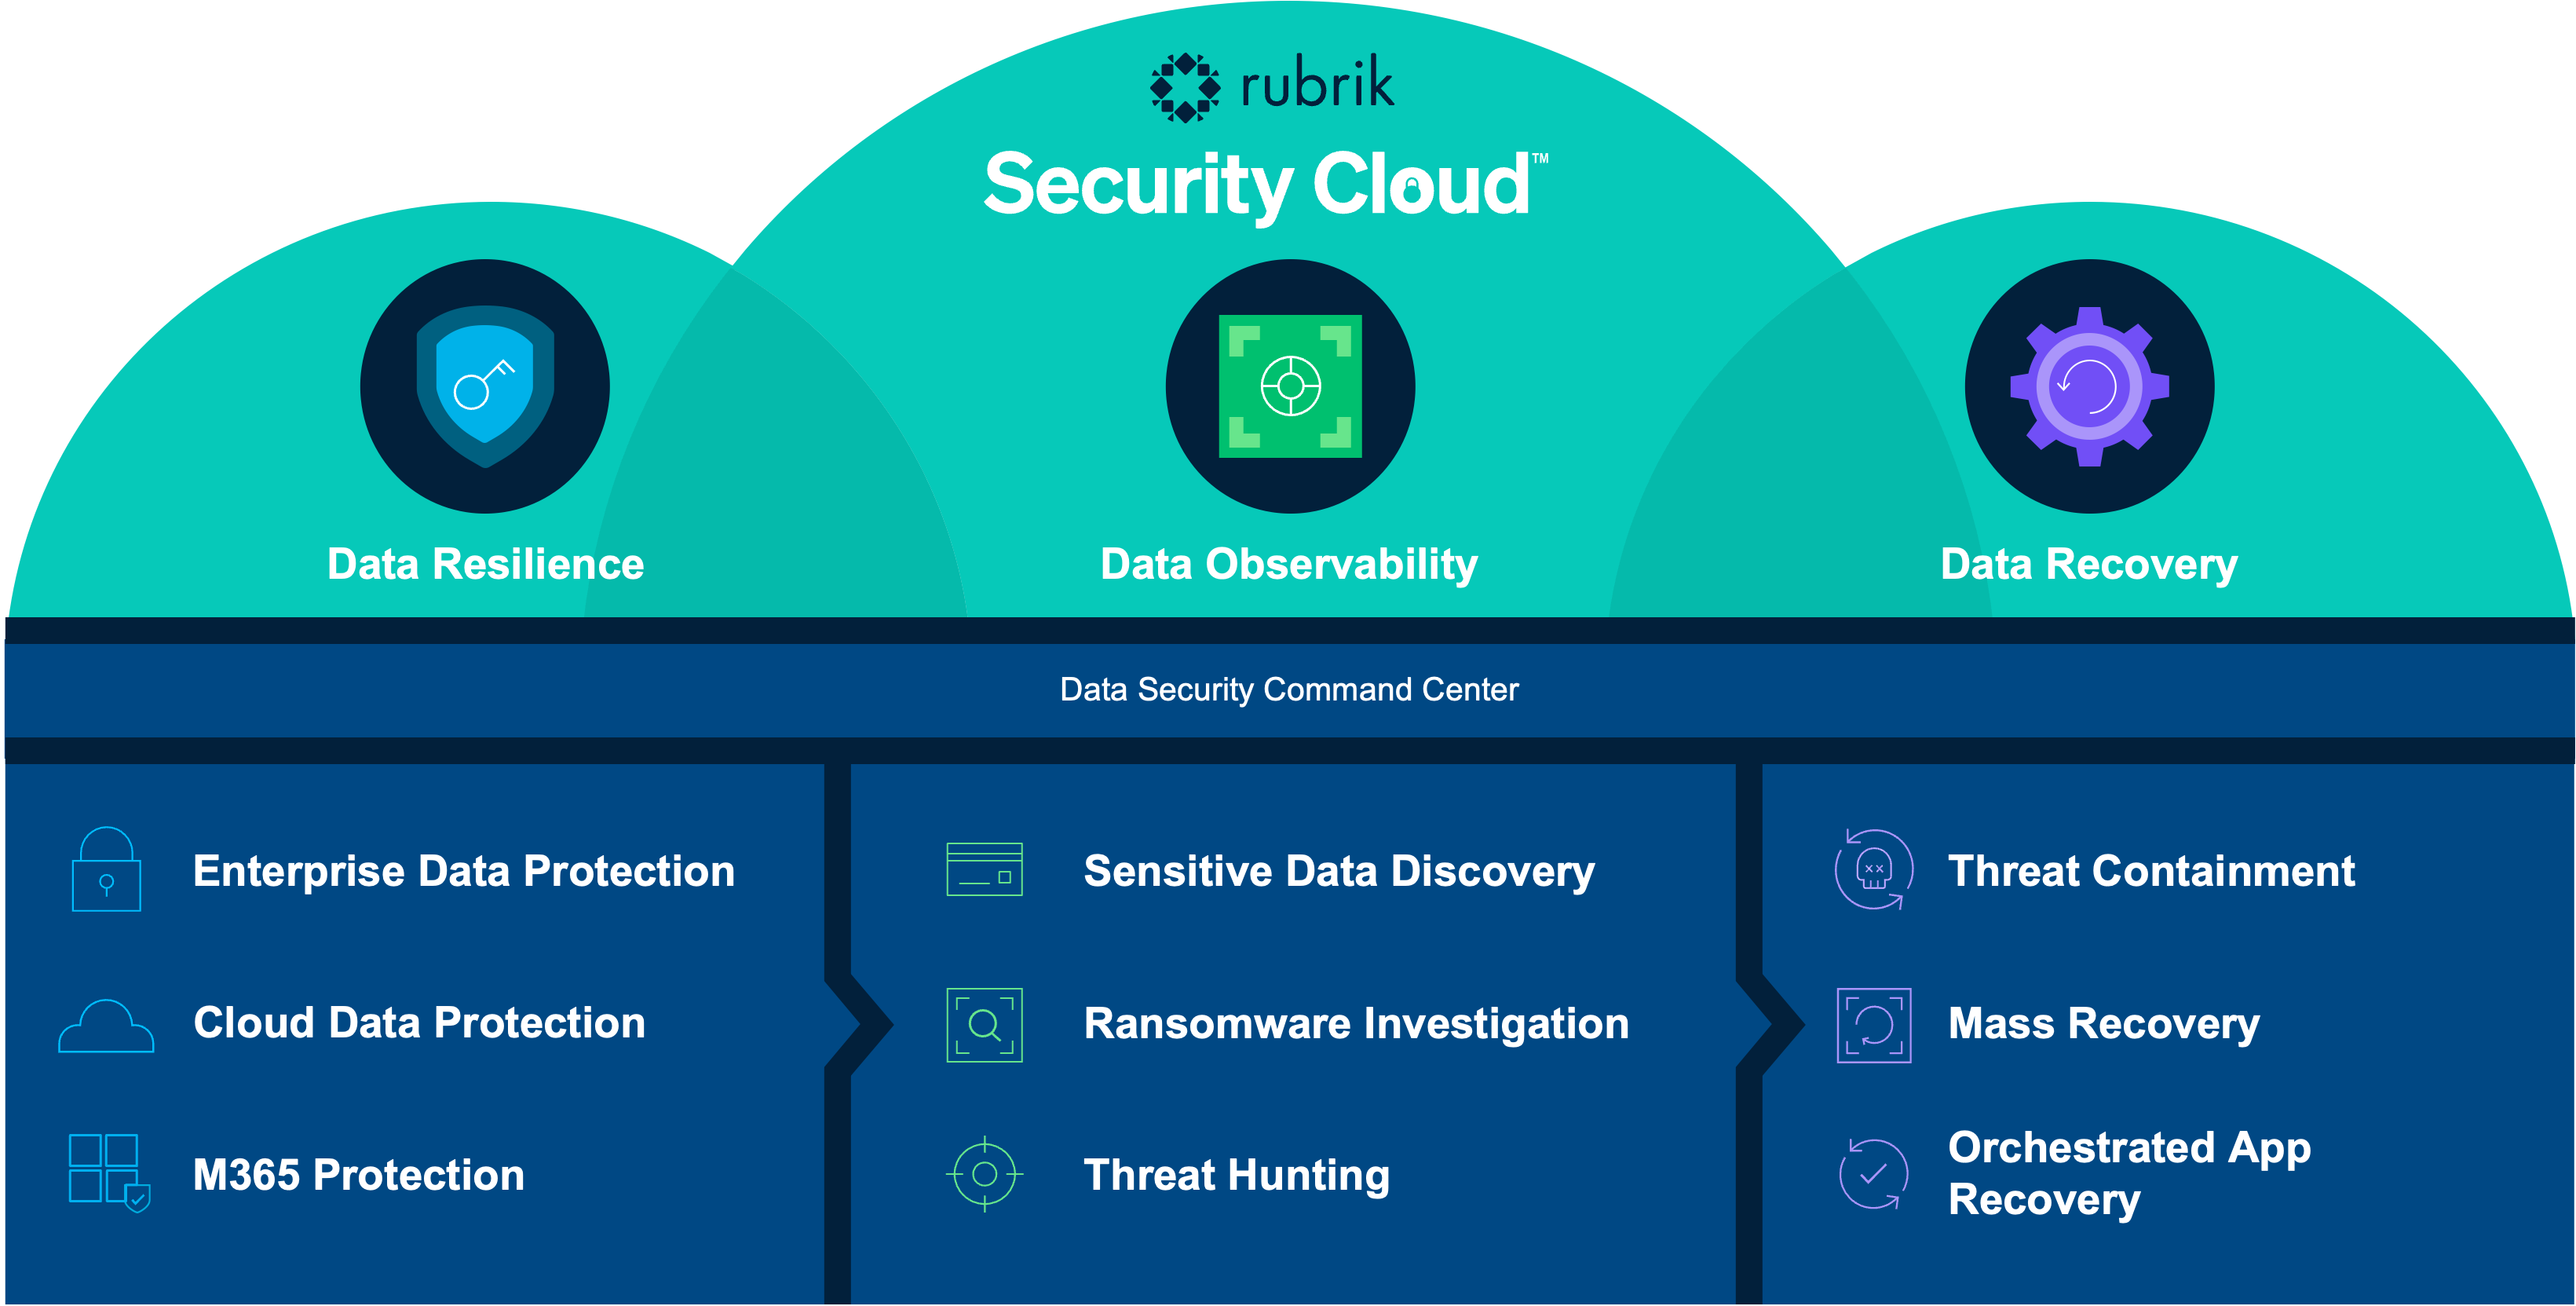 Rubrik Security Cloud